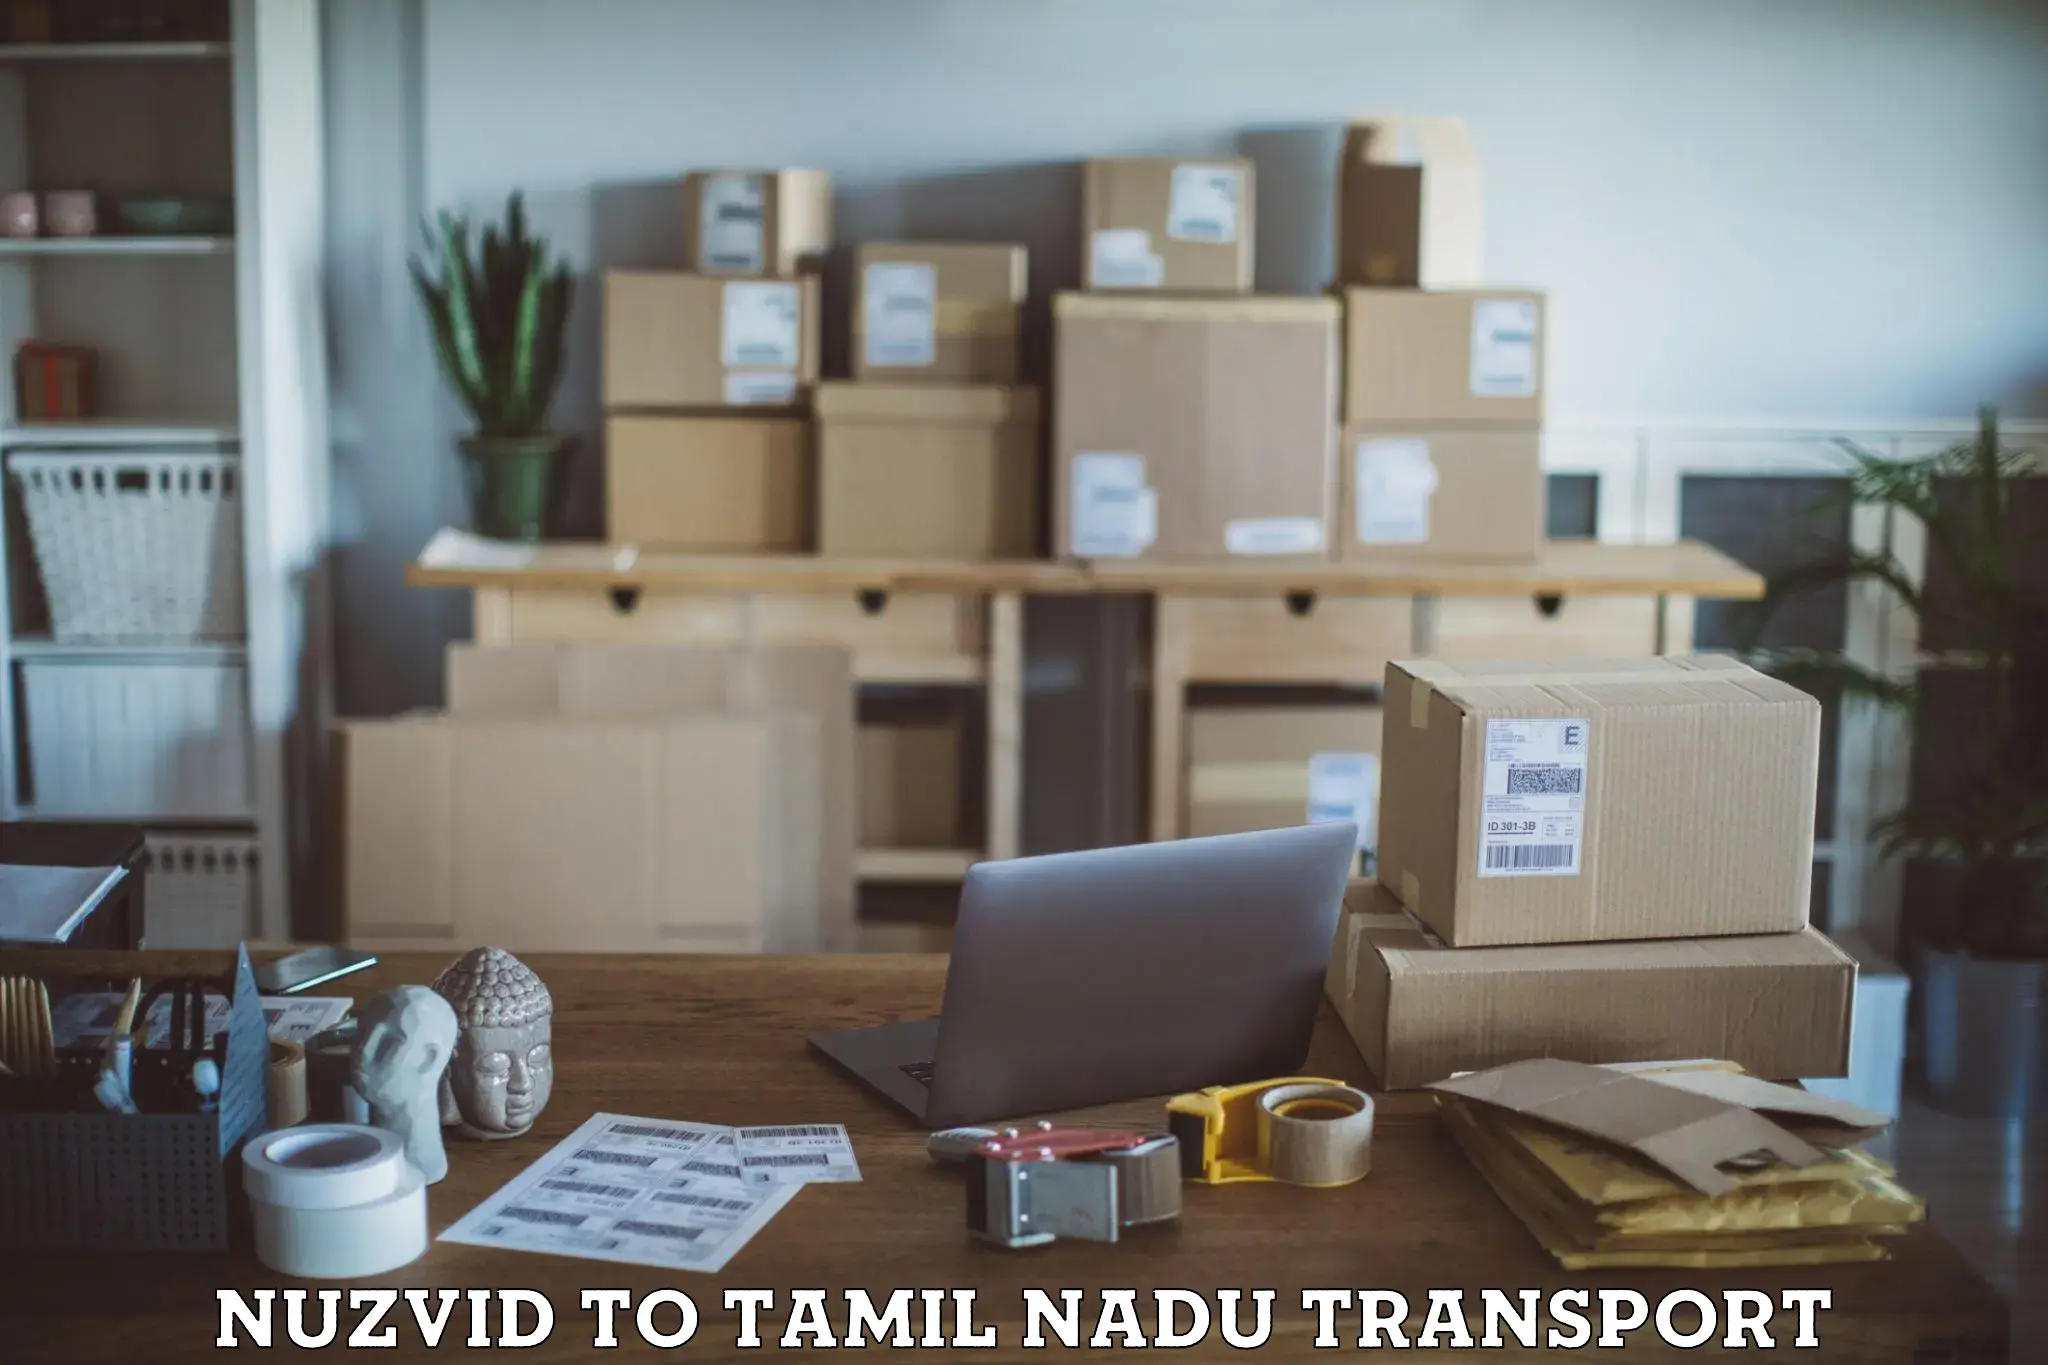 Daily transport service Nuzvid to Tamil Nadu